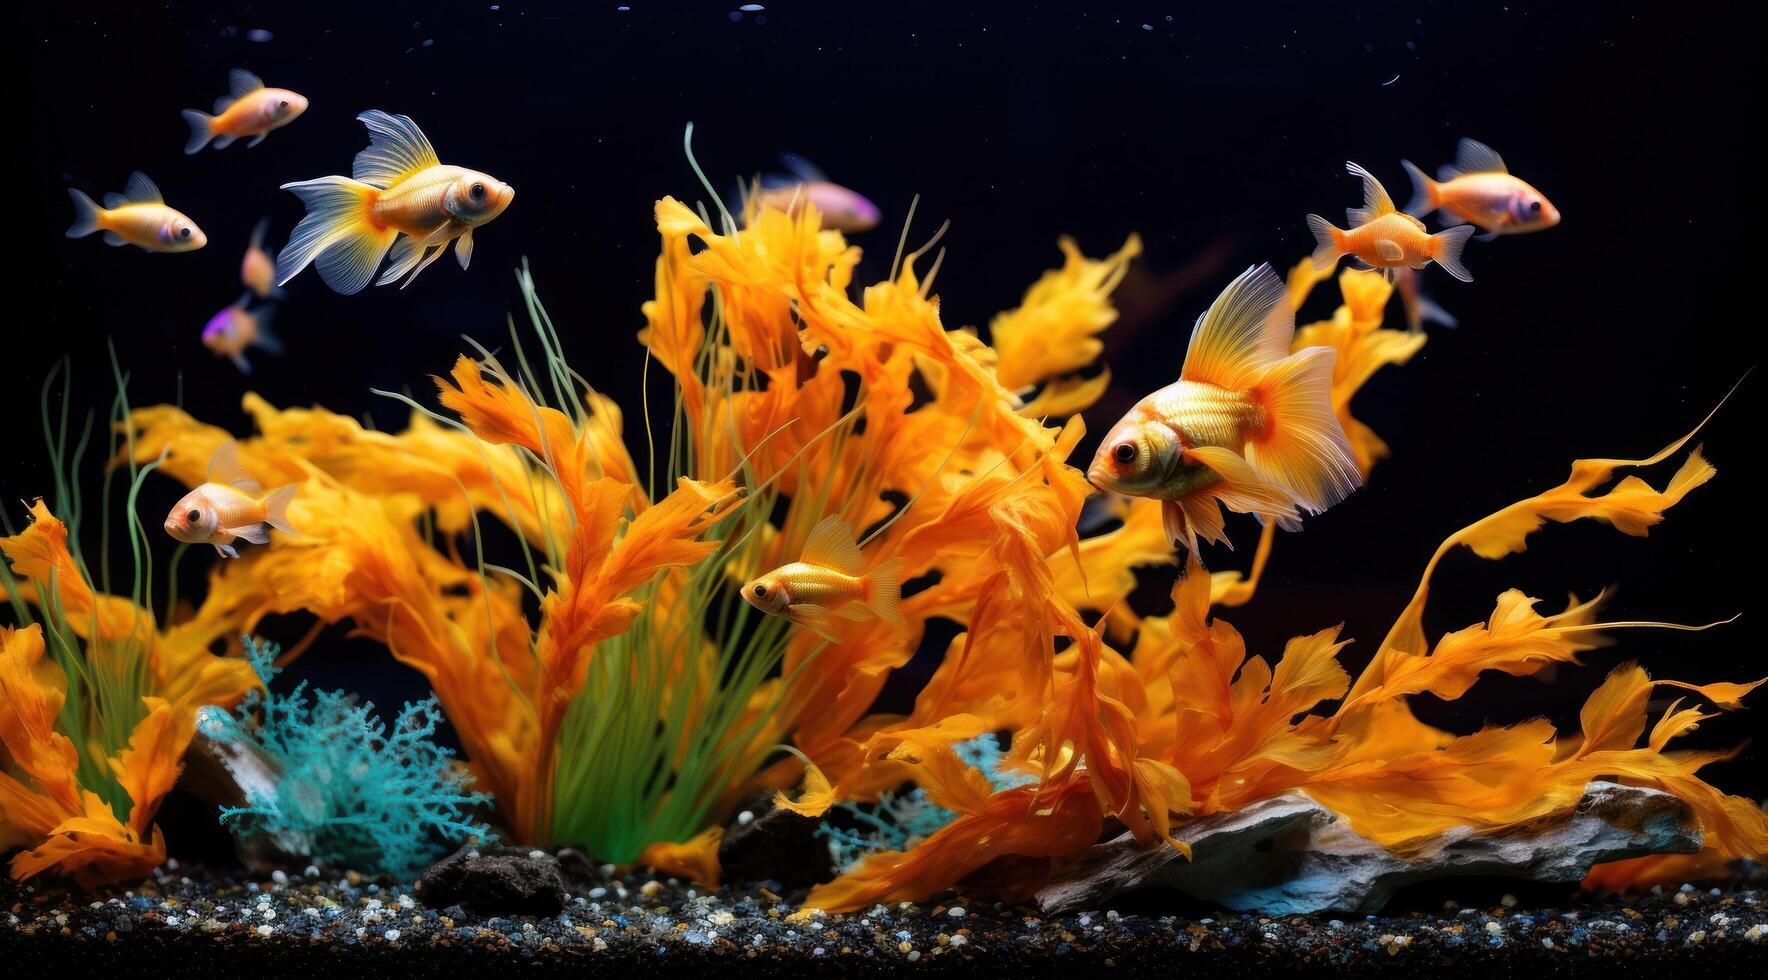 ai genererad gul fisk simning foto